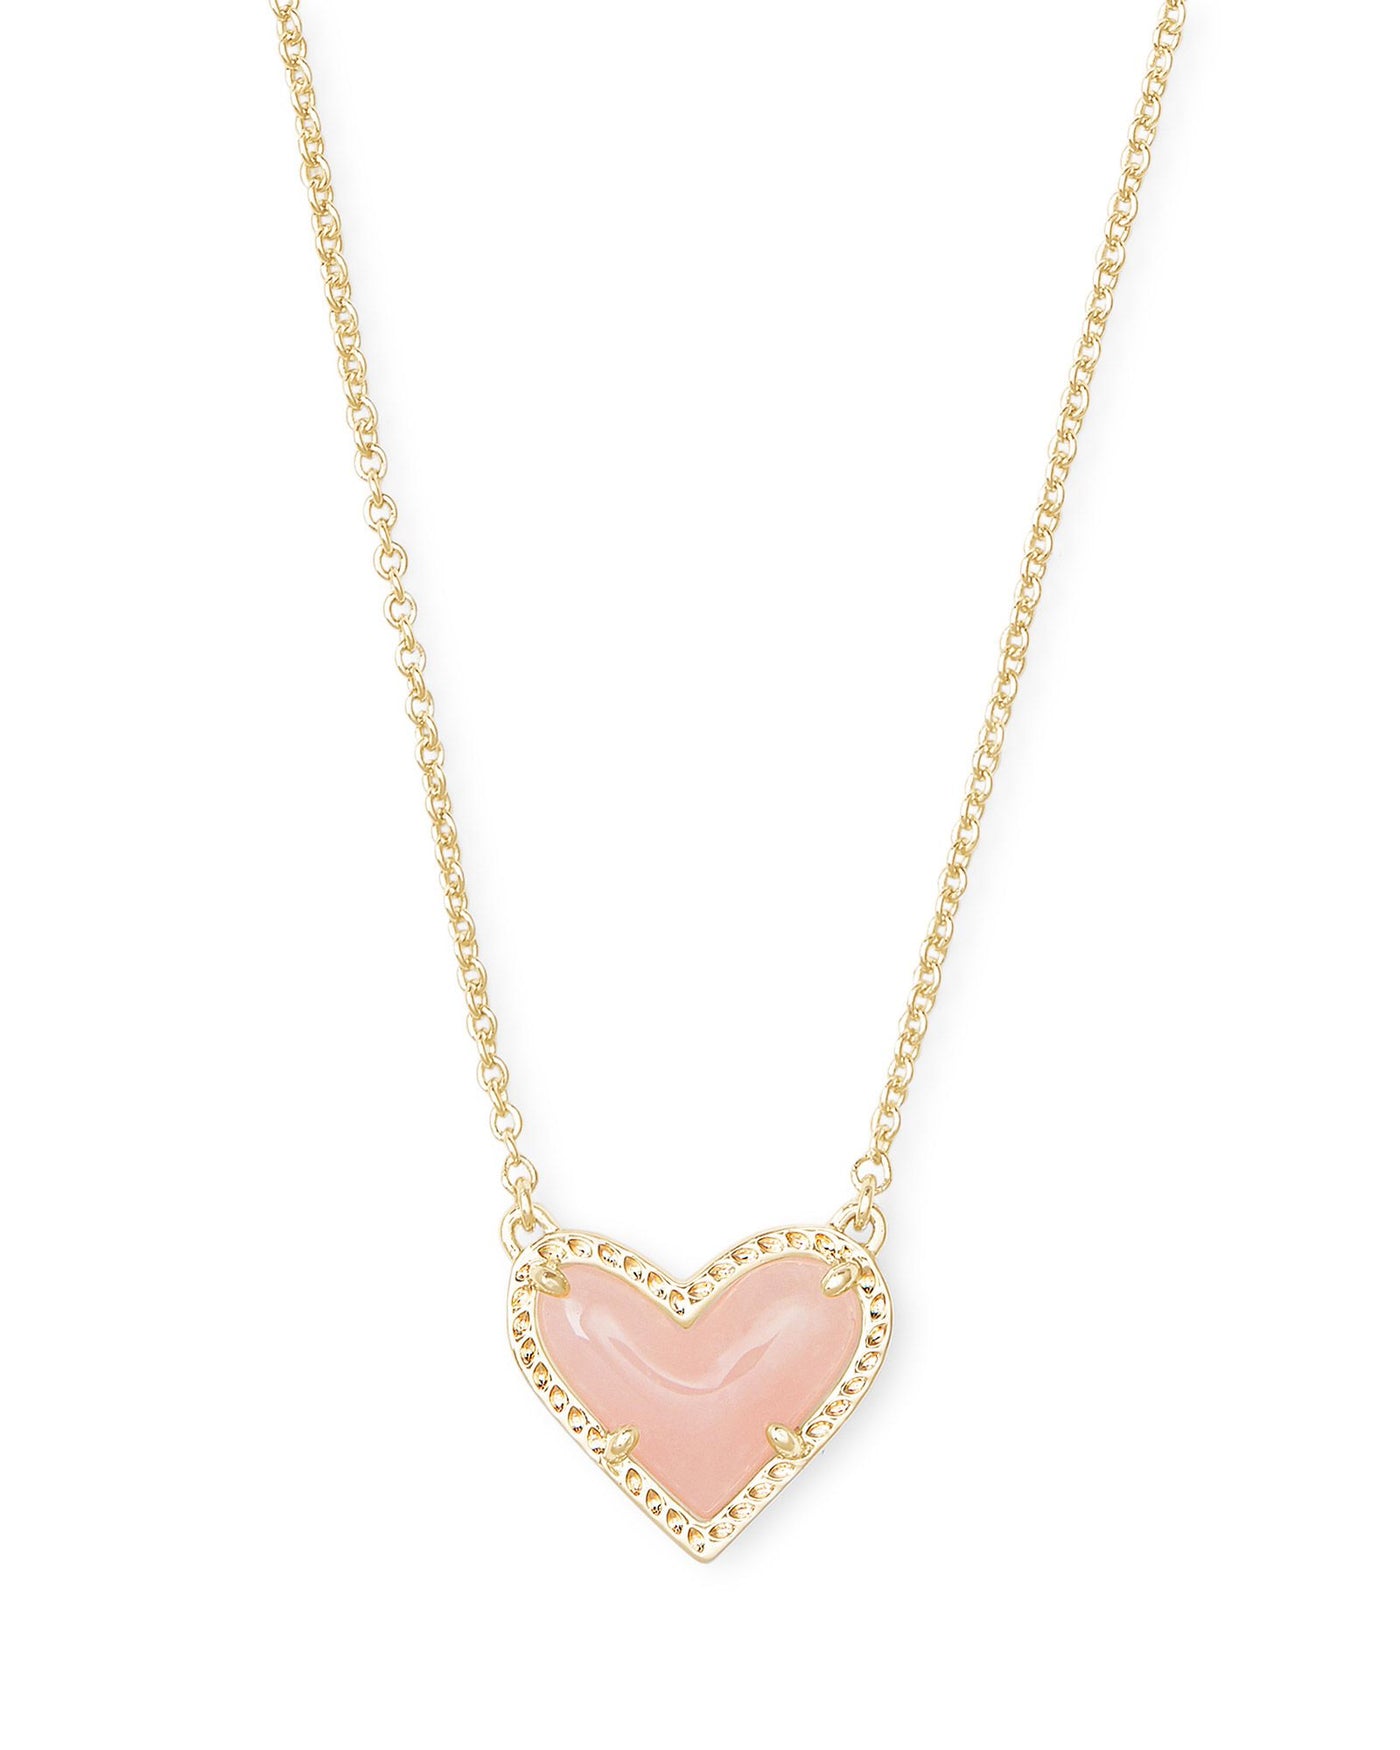 Ari Heart Pendant Necklace Gold Rose Quartz on white background, front view.